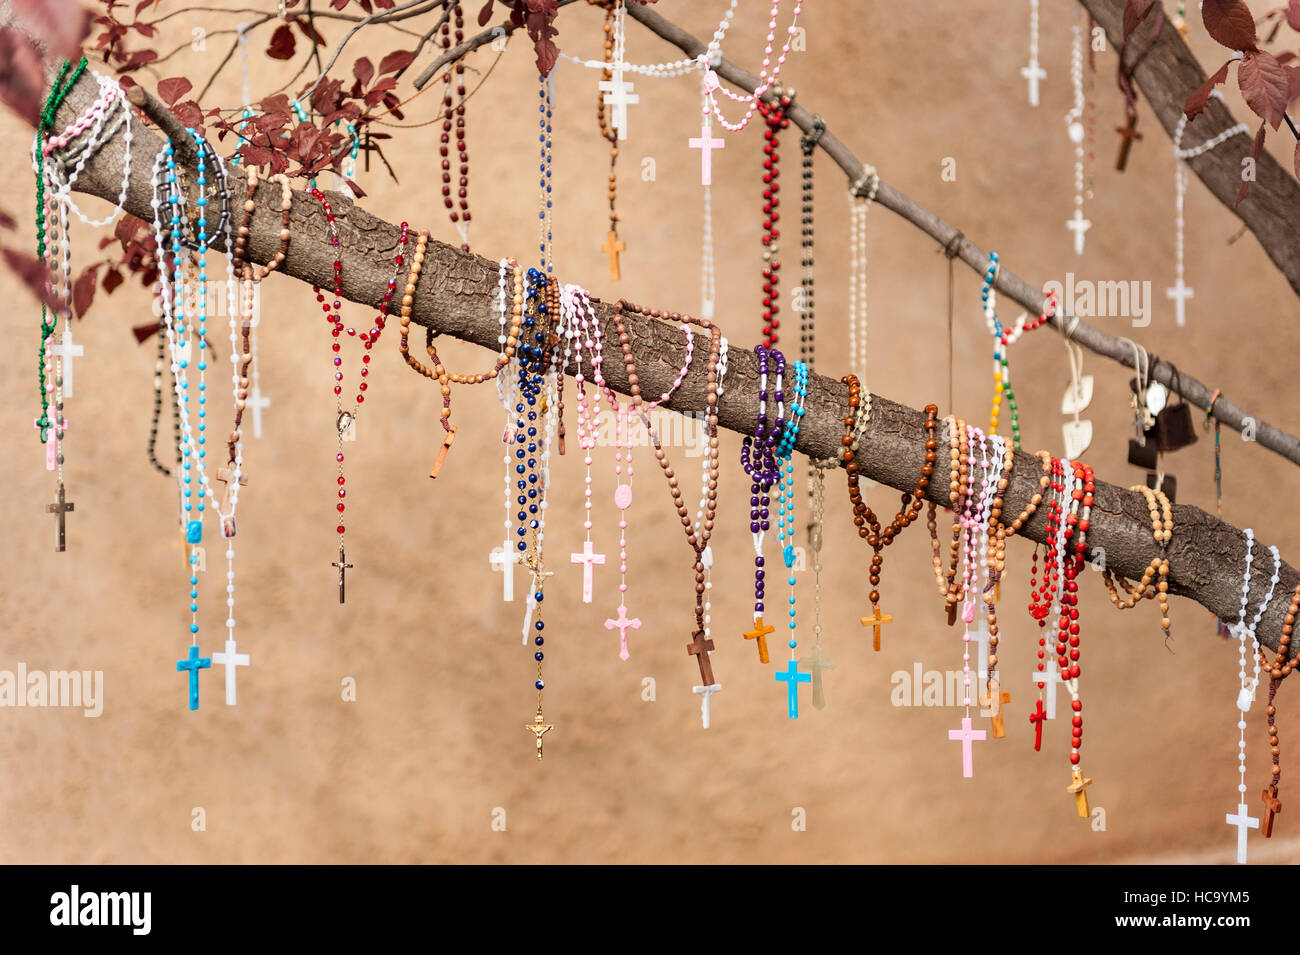 Several rosaries / prayers hanging from a tree branch at El Santuario de Chimayó, a Roman Catholic church in Chimayó, New Mexico Stock Photo